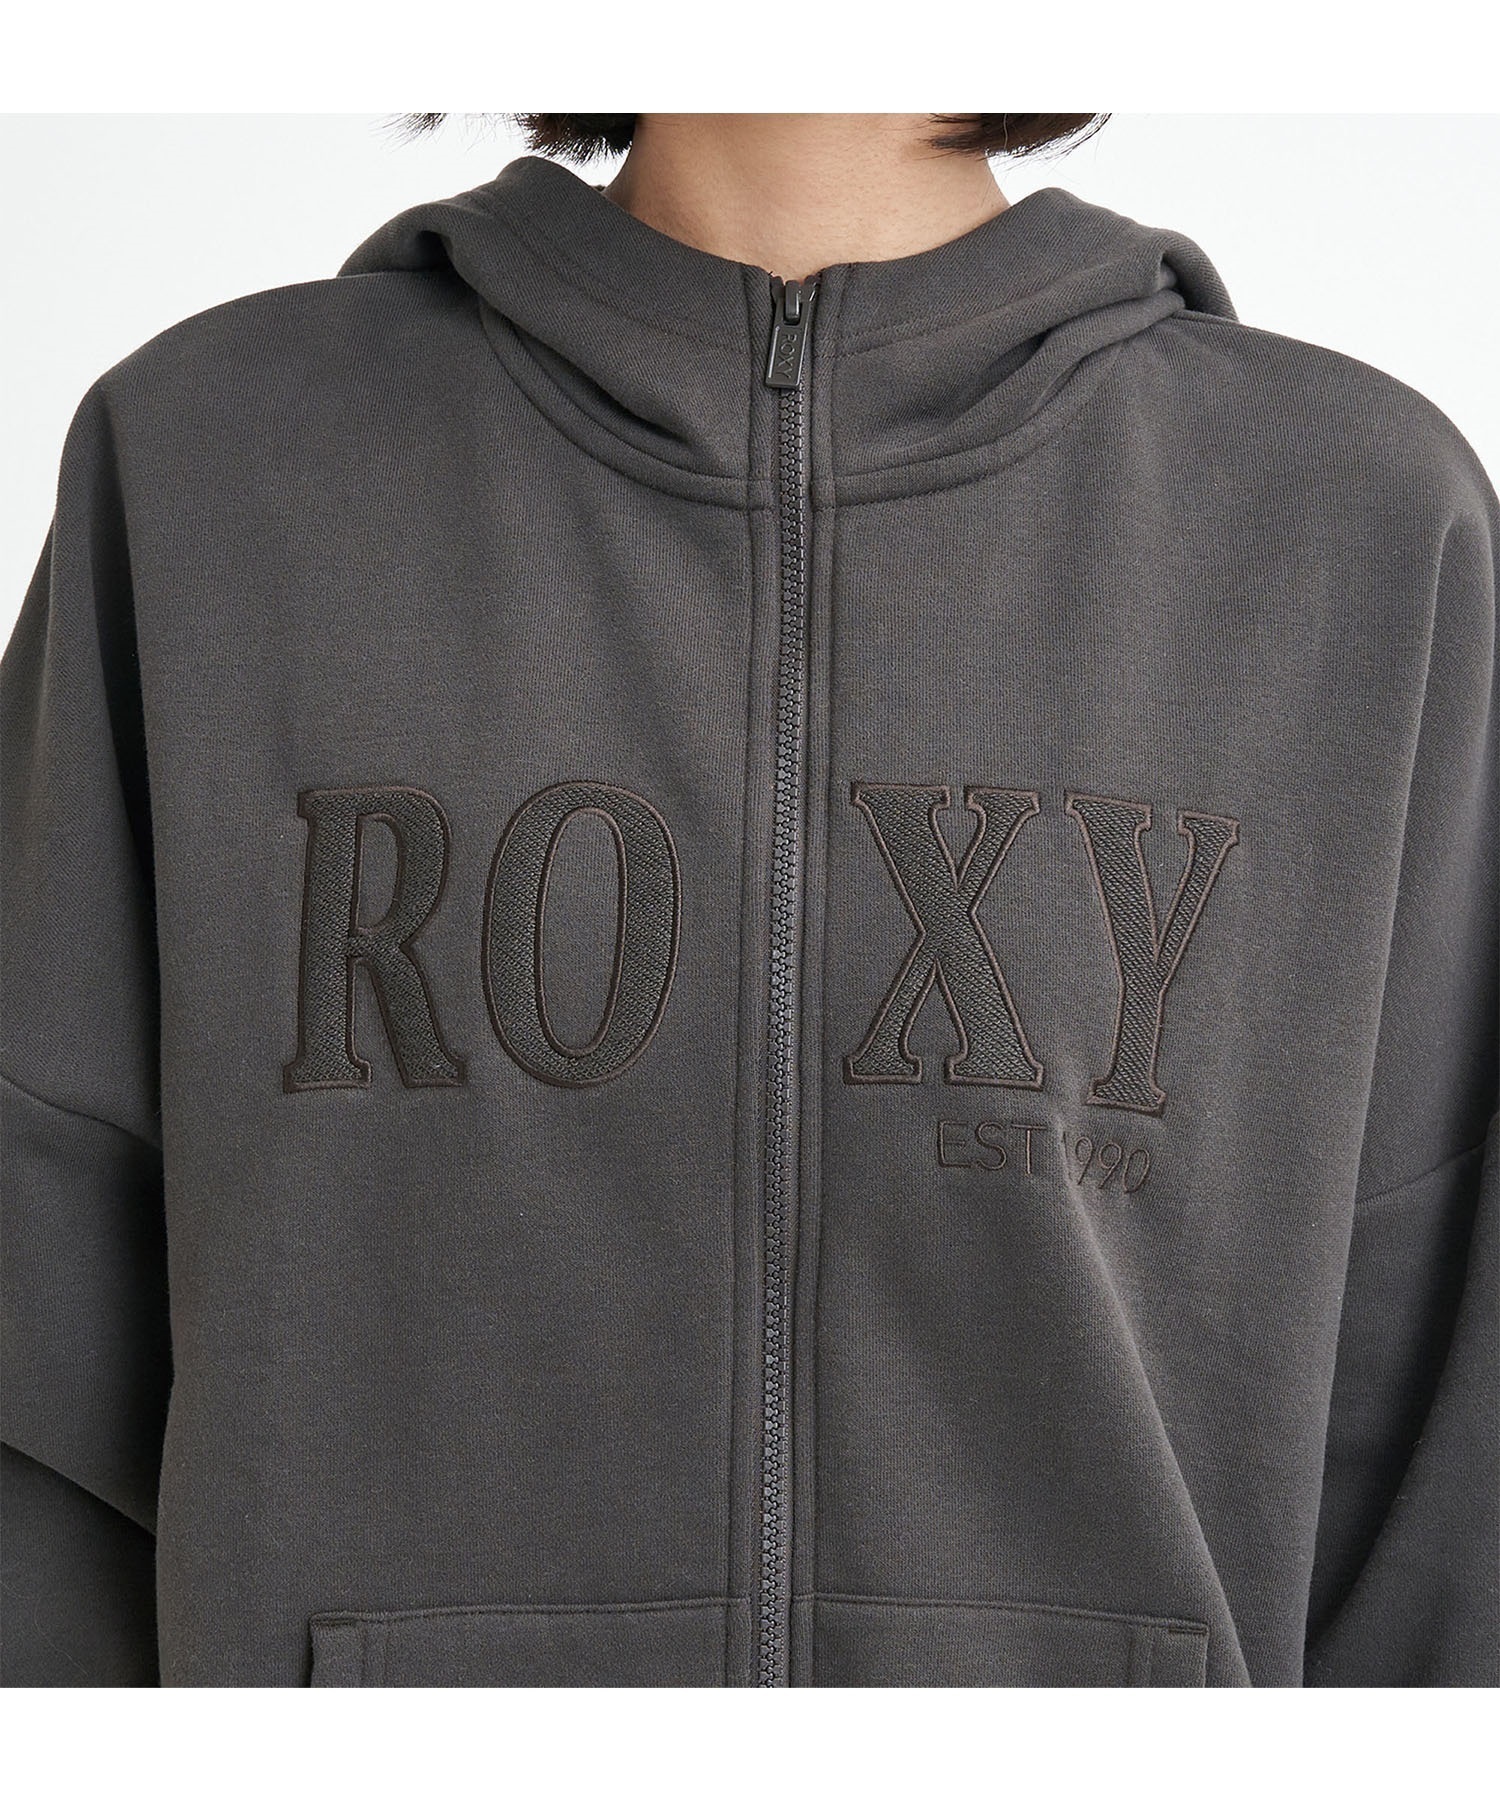 ROXY/ロキシー ジビー ジップアップパーカーレディース 裏起毛